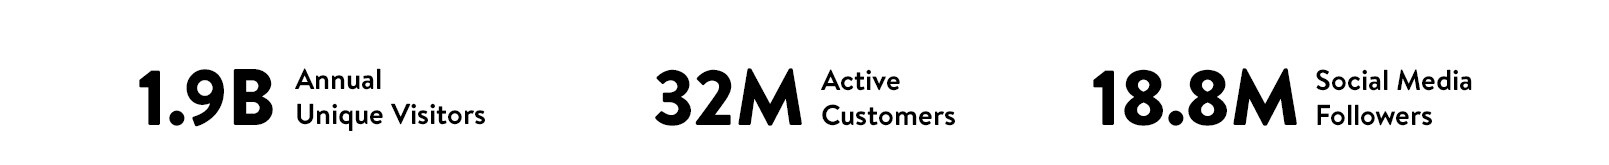 1.9B Annual Unique Visitors, 32M Active Customers, 18.8M Social Media Followers